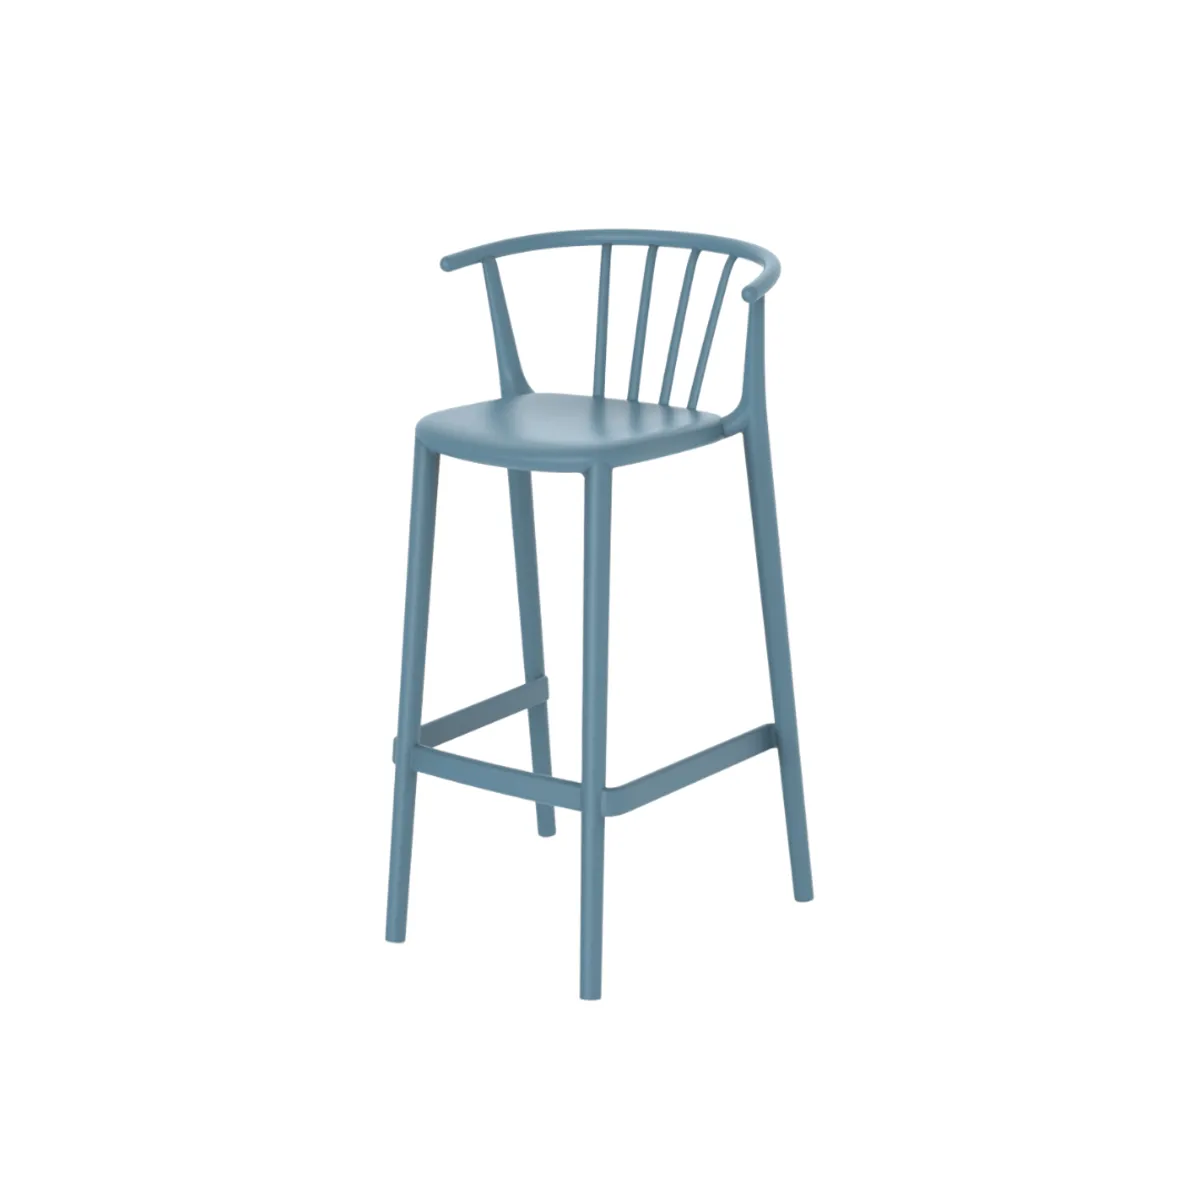 Maple bar stool 2